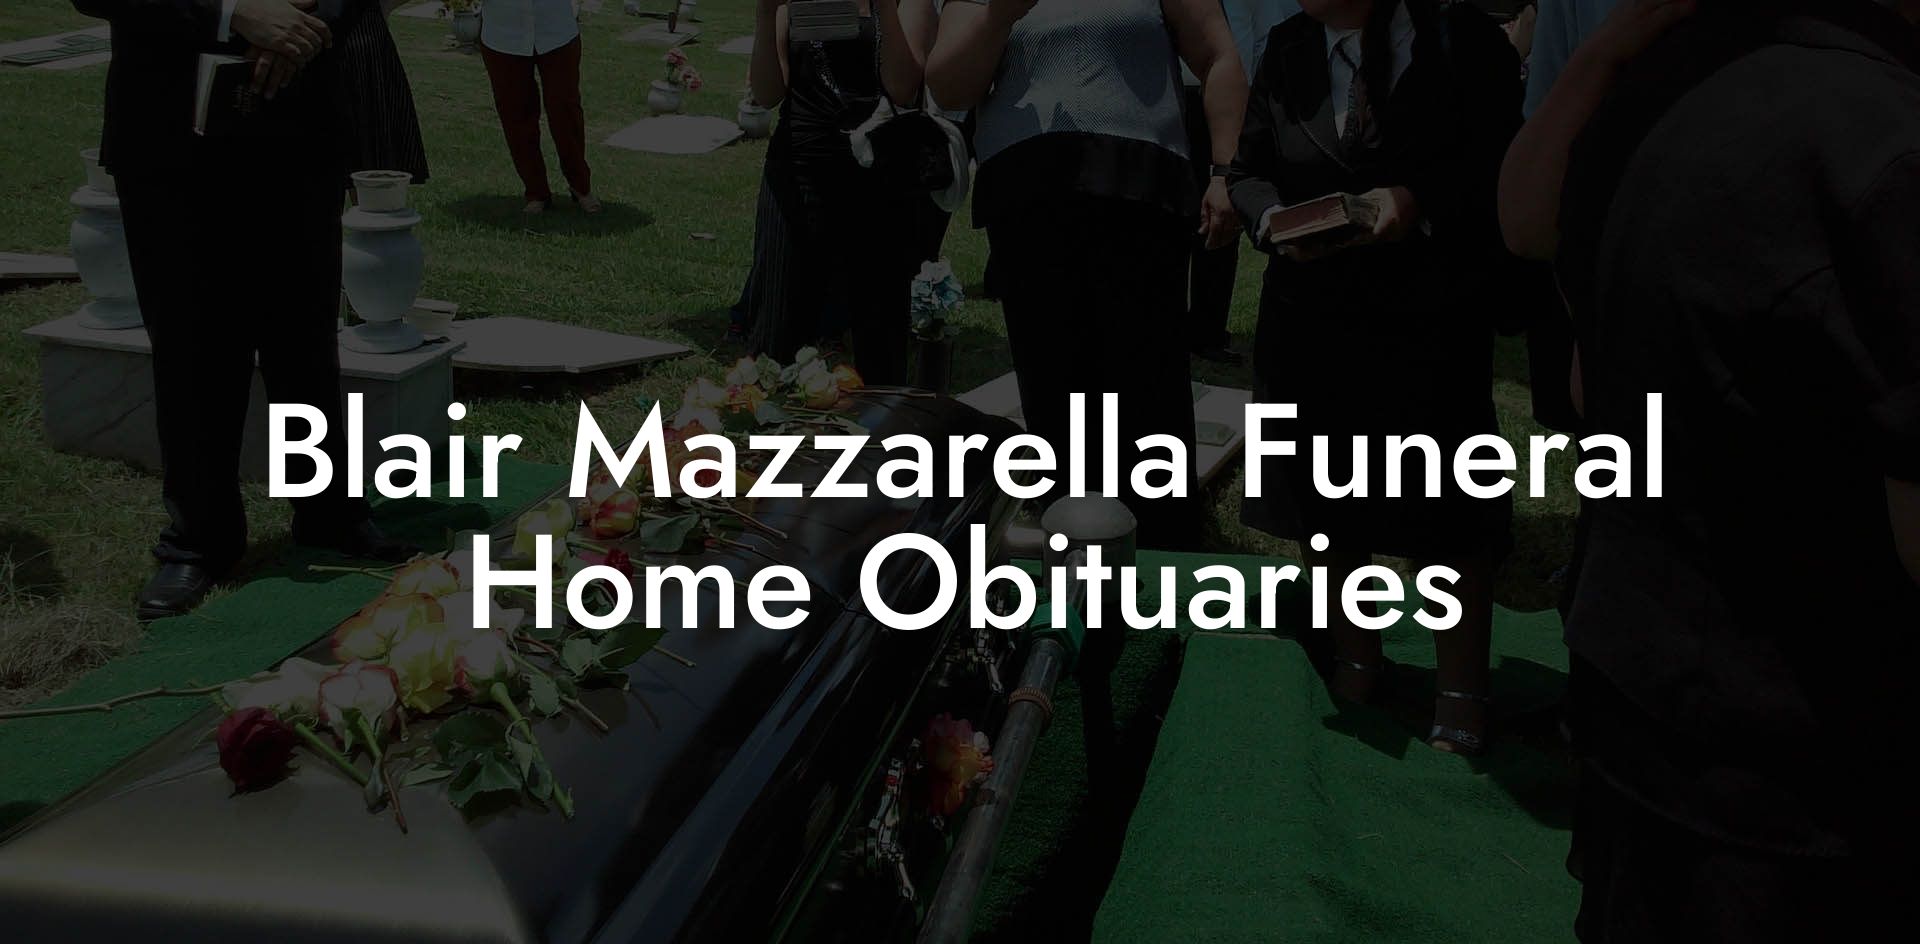 Blair Mazzarella Funeral Home Obituaries